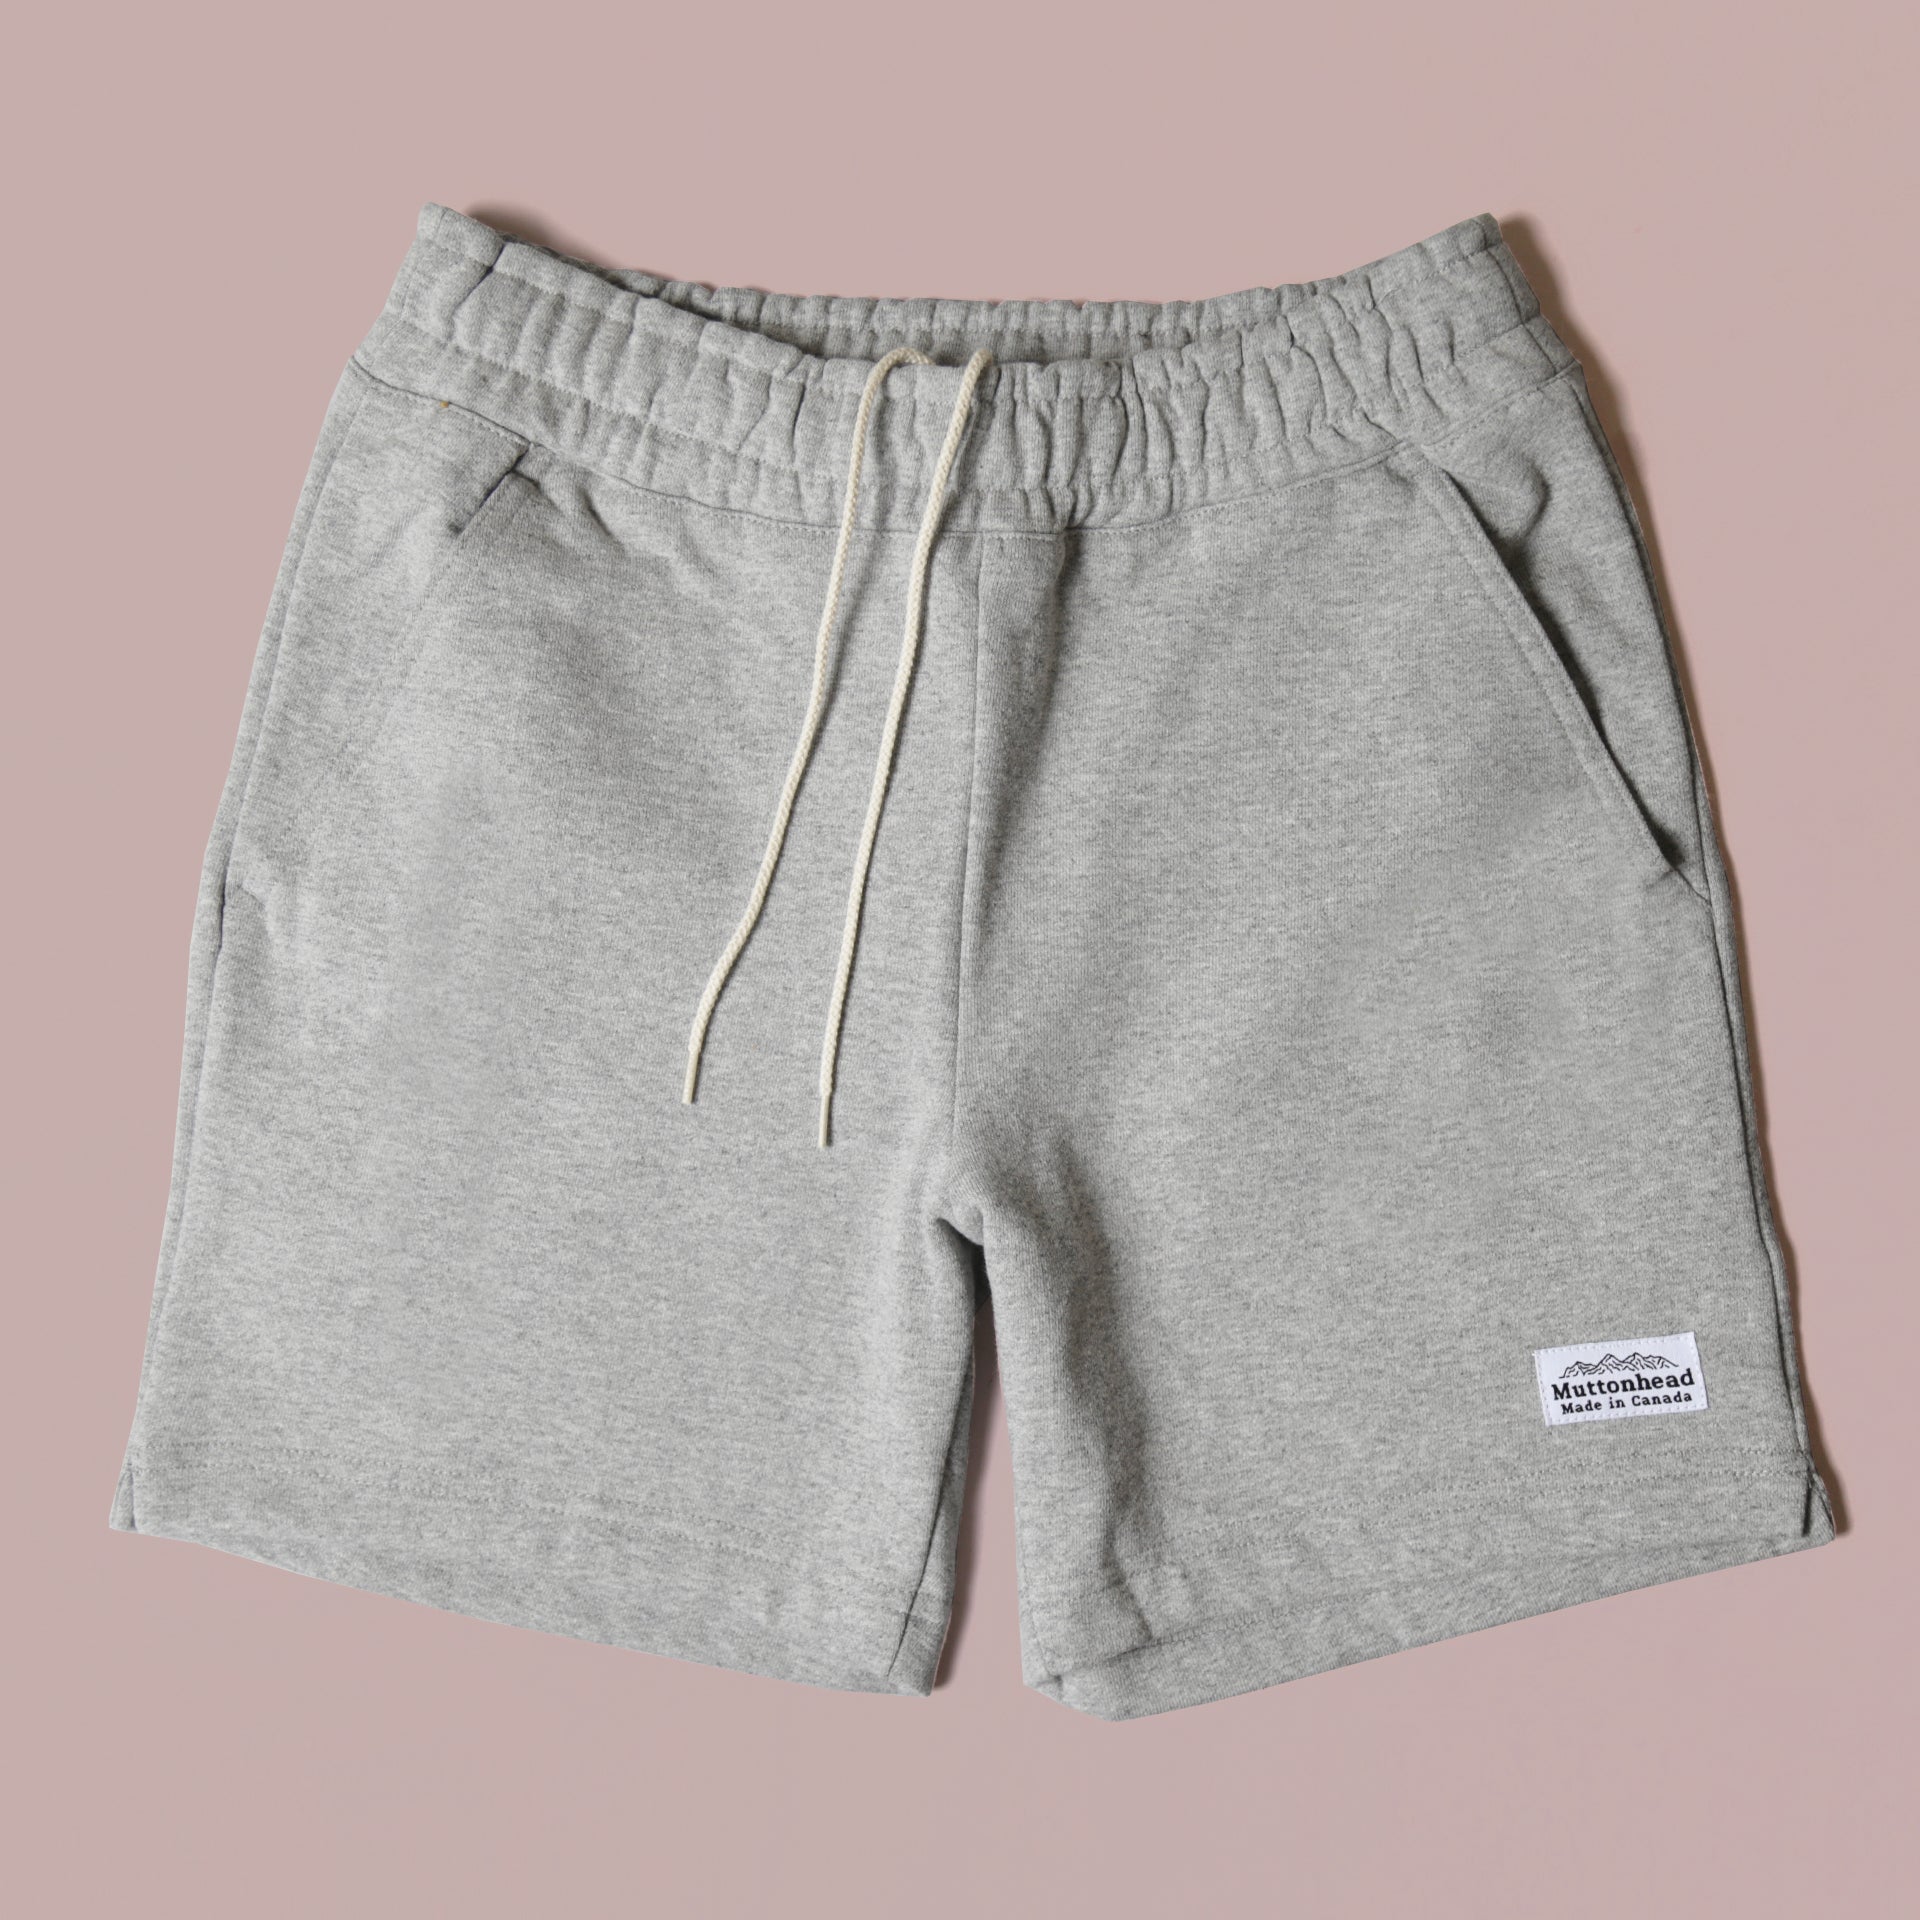 Roamer Shorts - Classic Grey Sweat Short